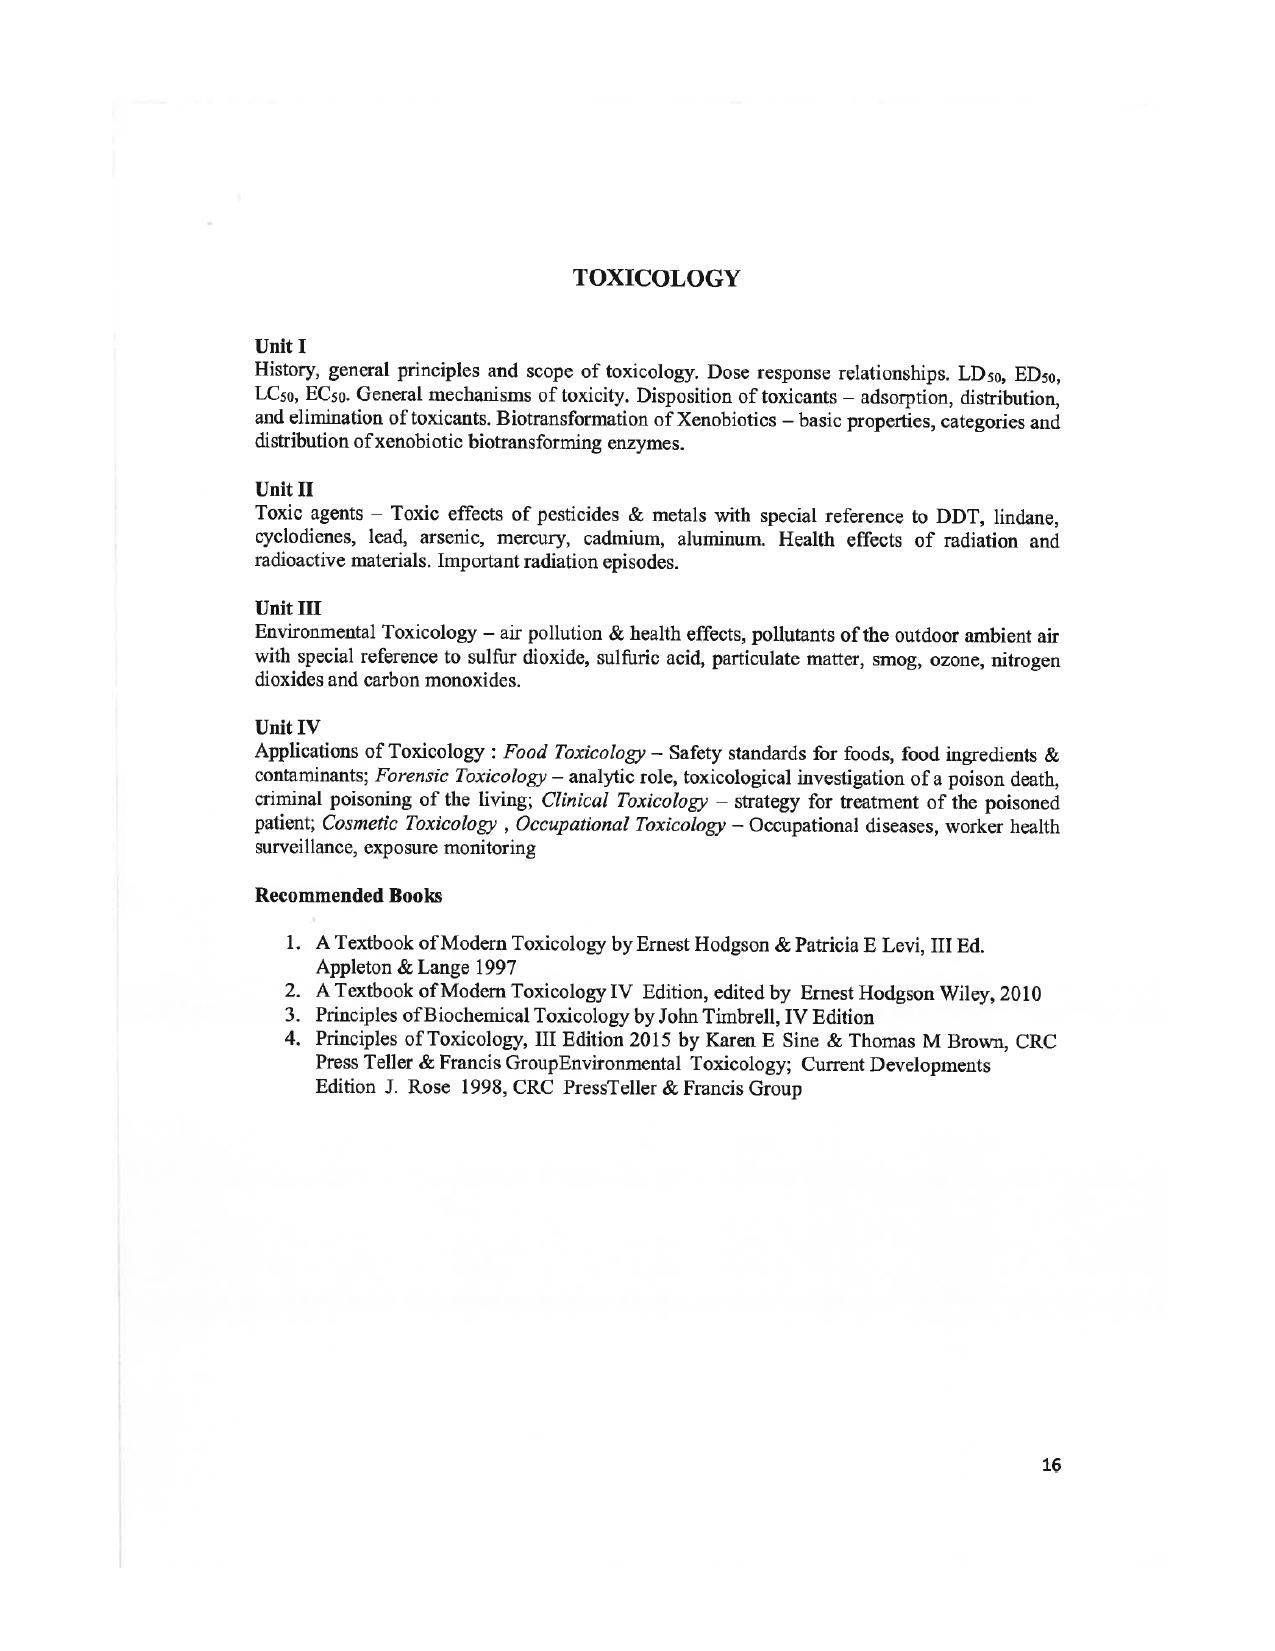 JMI Entrance Exam FACULTY OF NATURAL SCIENCES Syllabus - Page 16